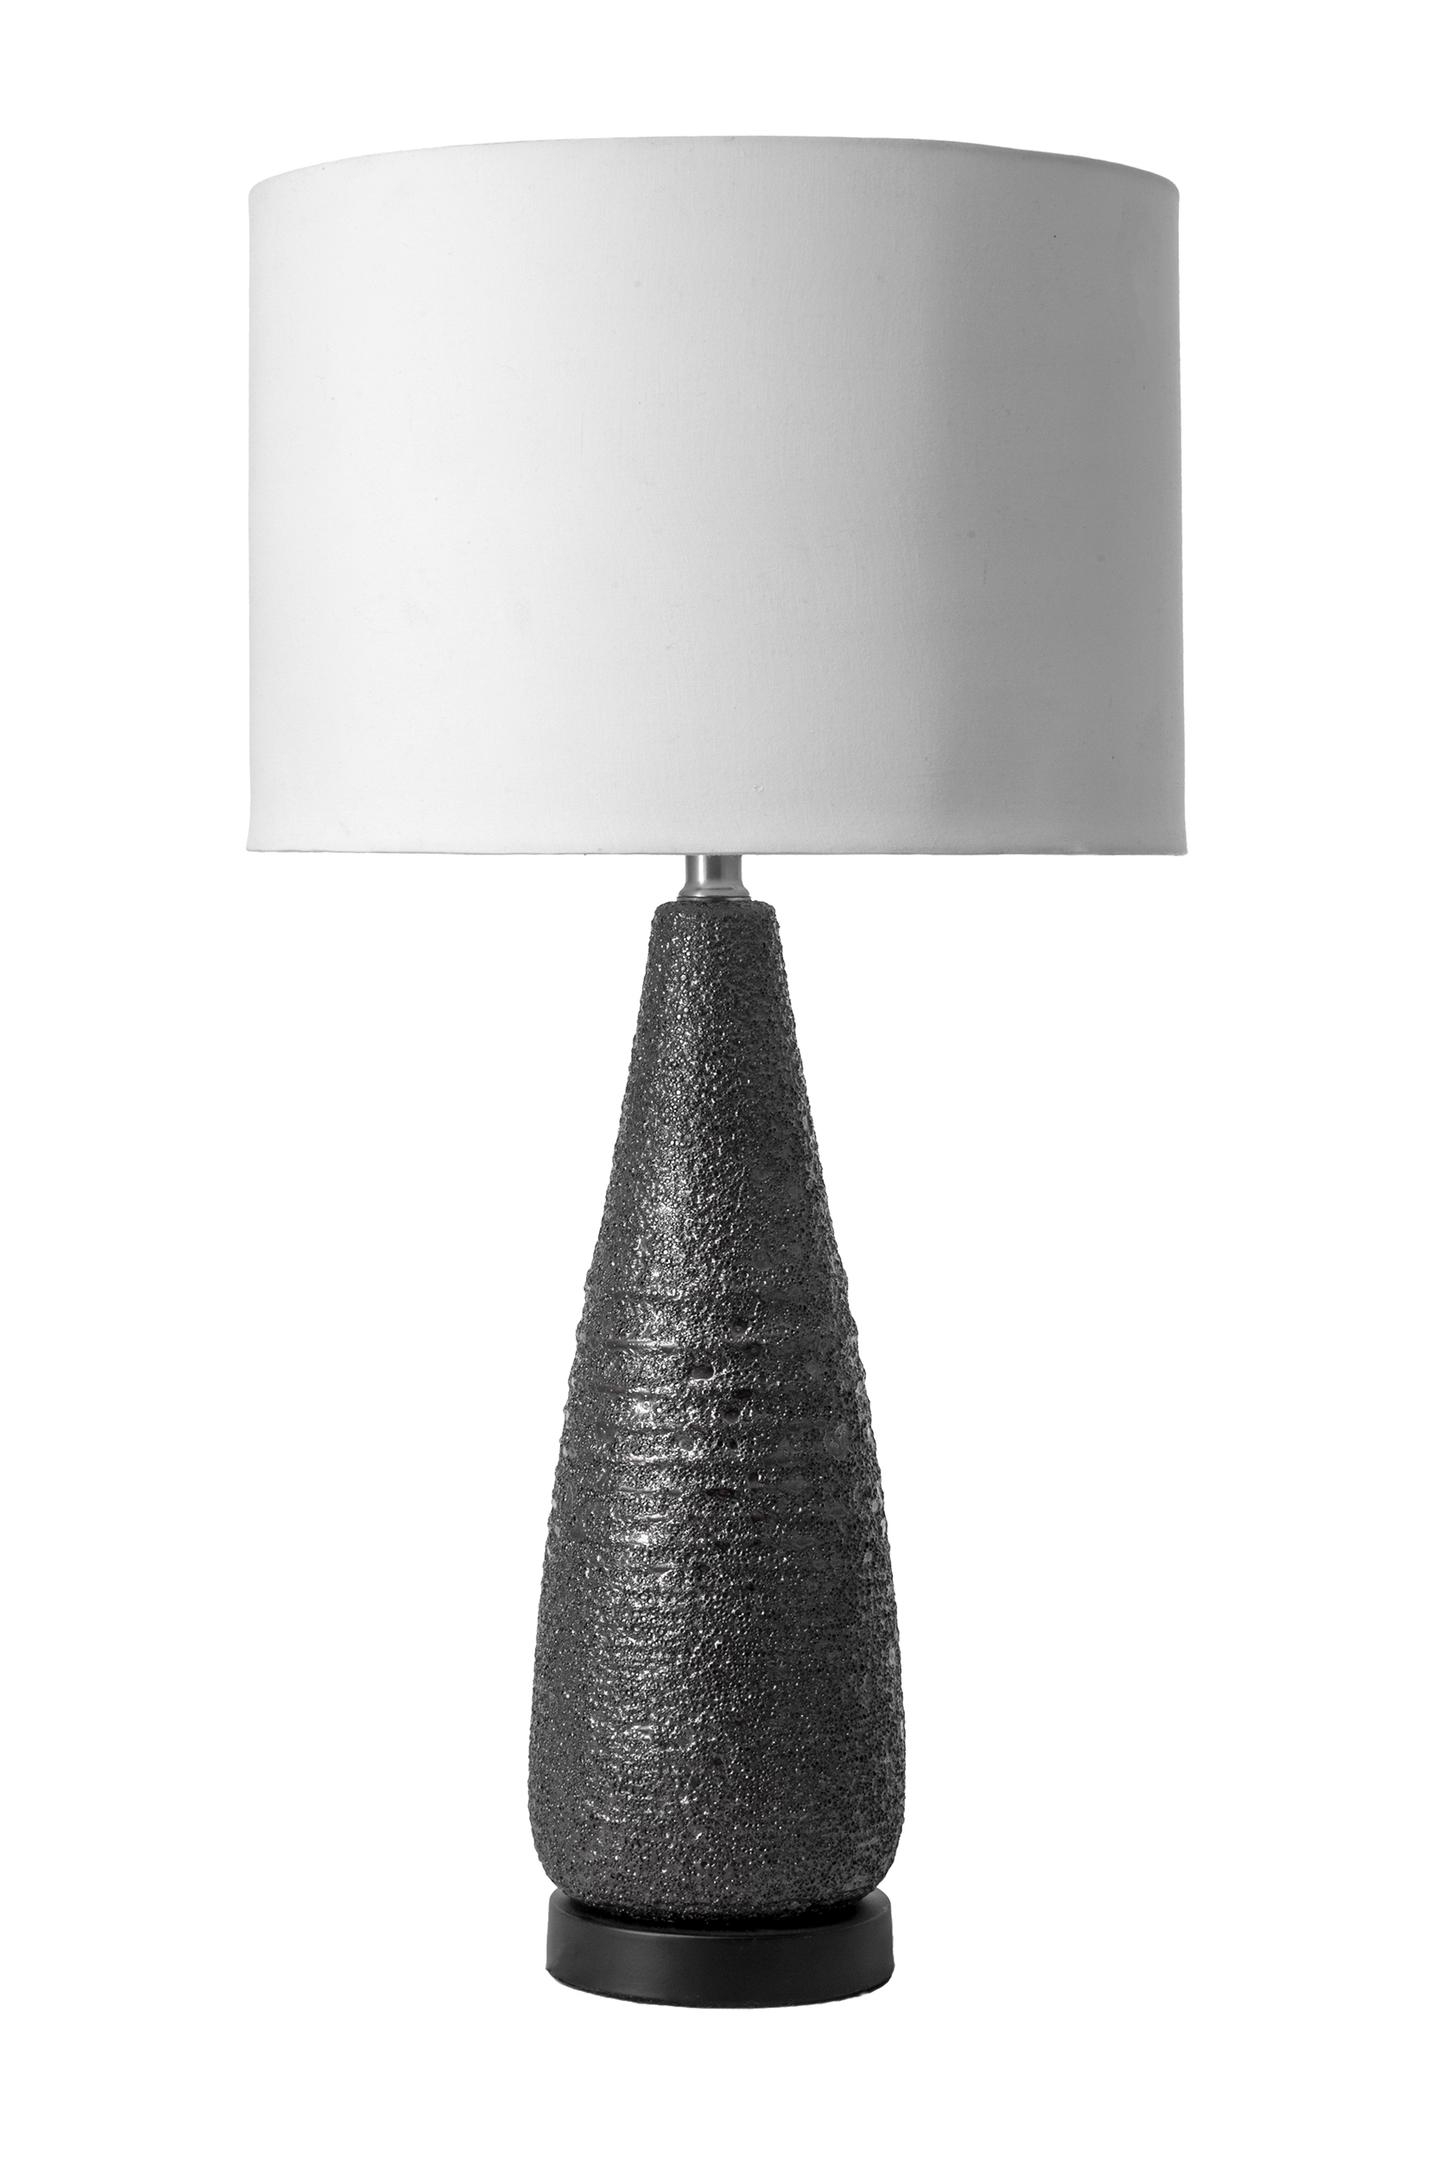 Upland Ceramic Table Lamp, 29" - Image 0